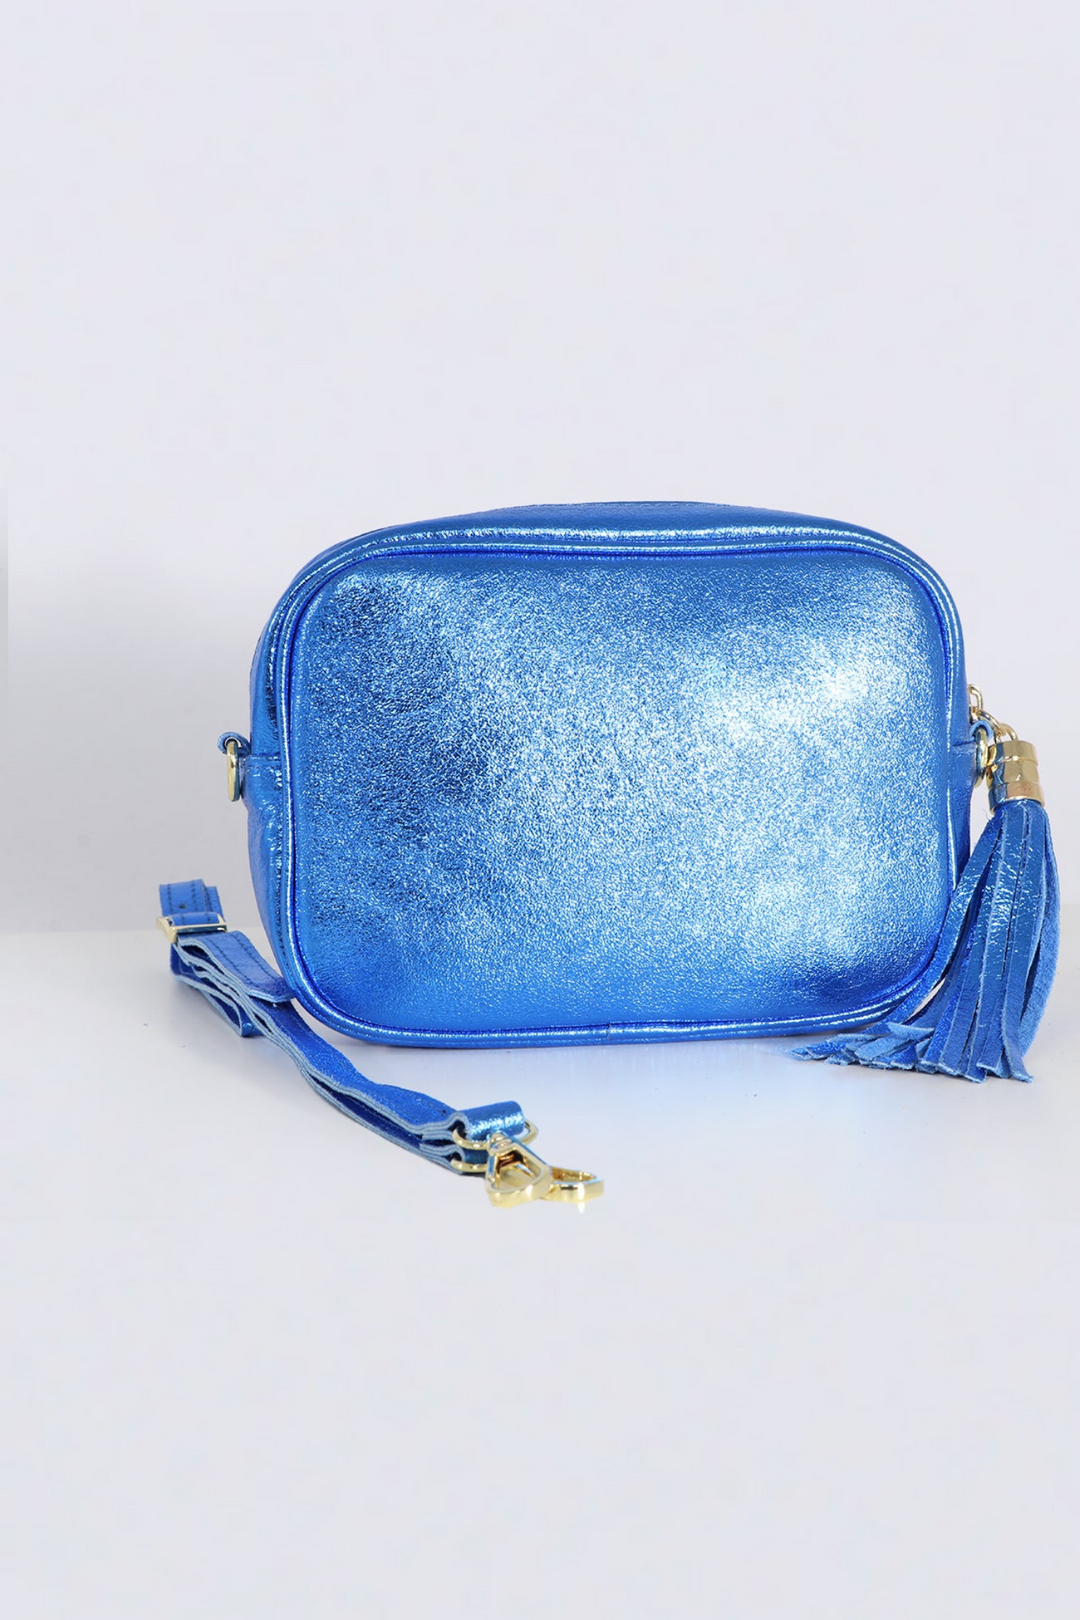 Italian Leather Metallic Light Blue Camera Bag